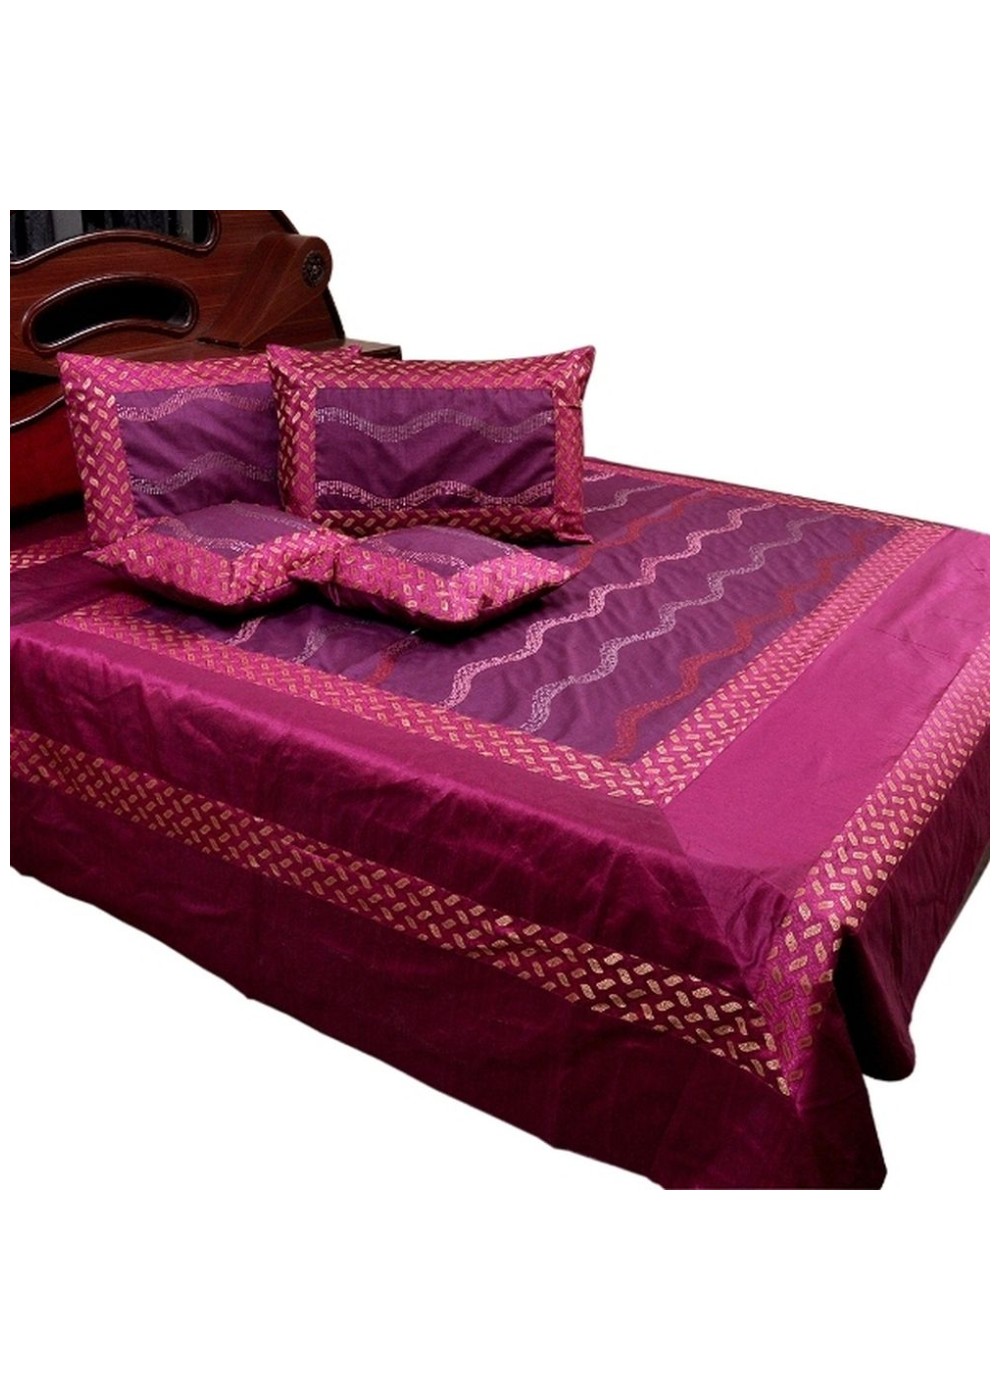 Ethnic Design Magenta And Purple Silk Bed Cover Set